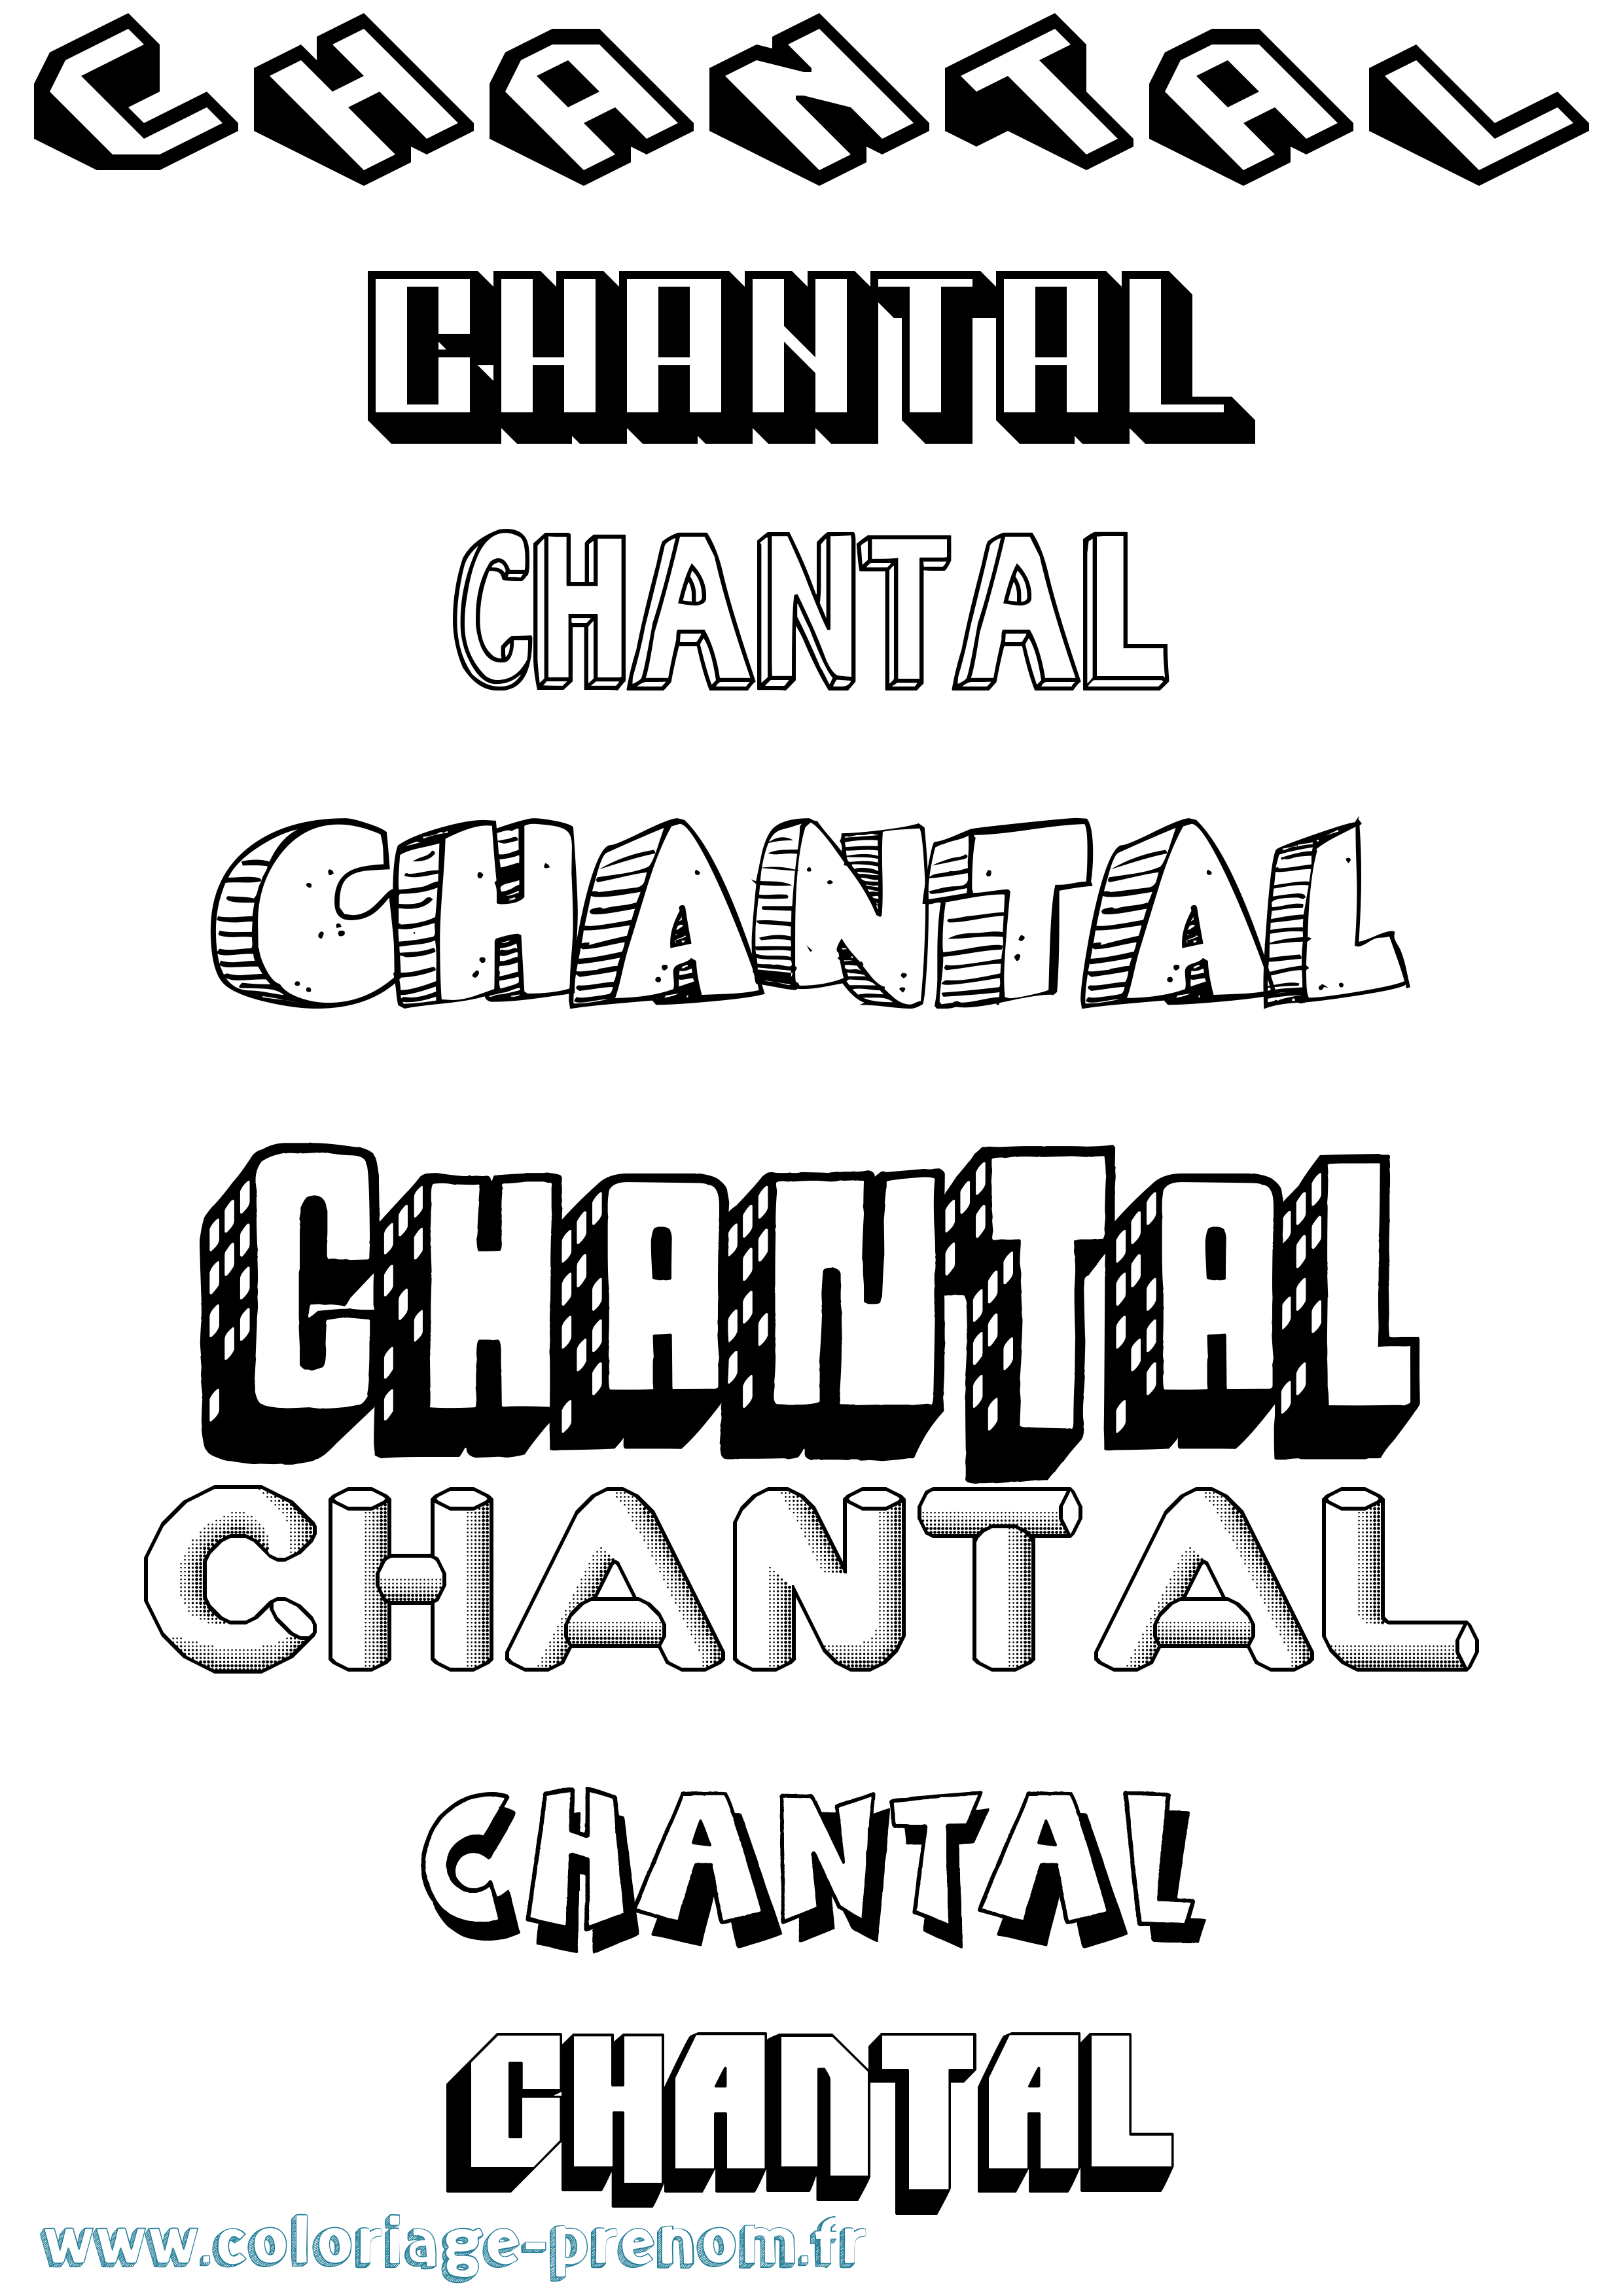 Coloriage prénom Chantal